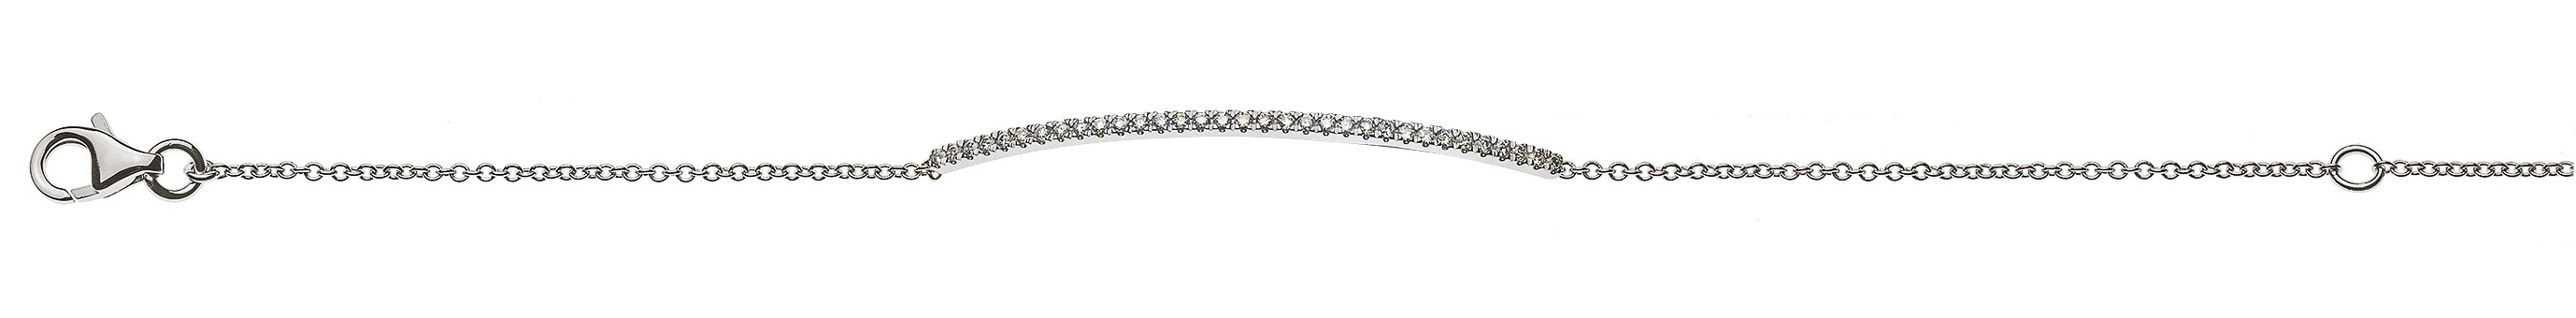 AURONOS Prestige Armband 18K Weissgold 33 Diamanten 0.19ct 19cm